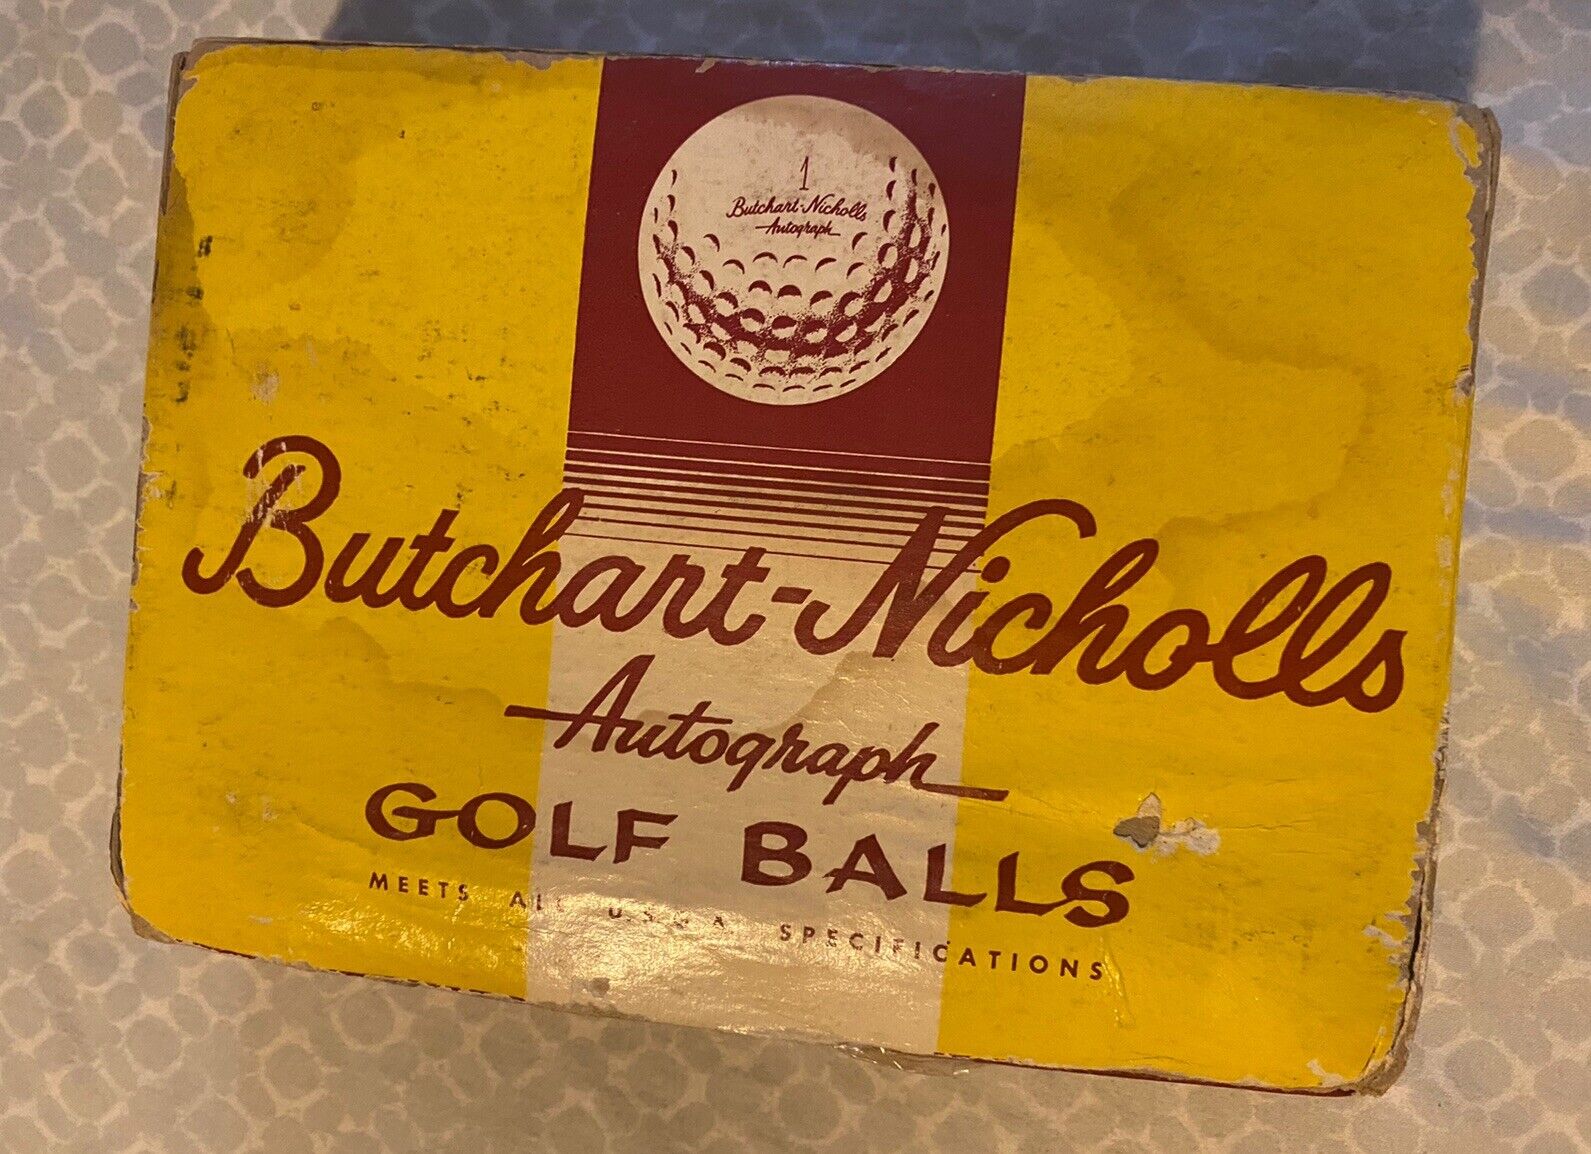 VERY RARE SEALED DOZEN - 1958 Butchart Nicholls Autograph Golf Balls